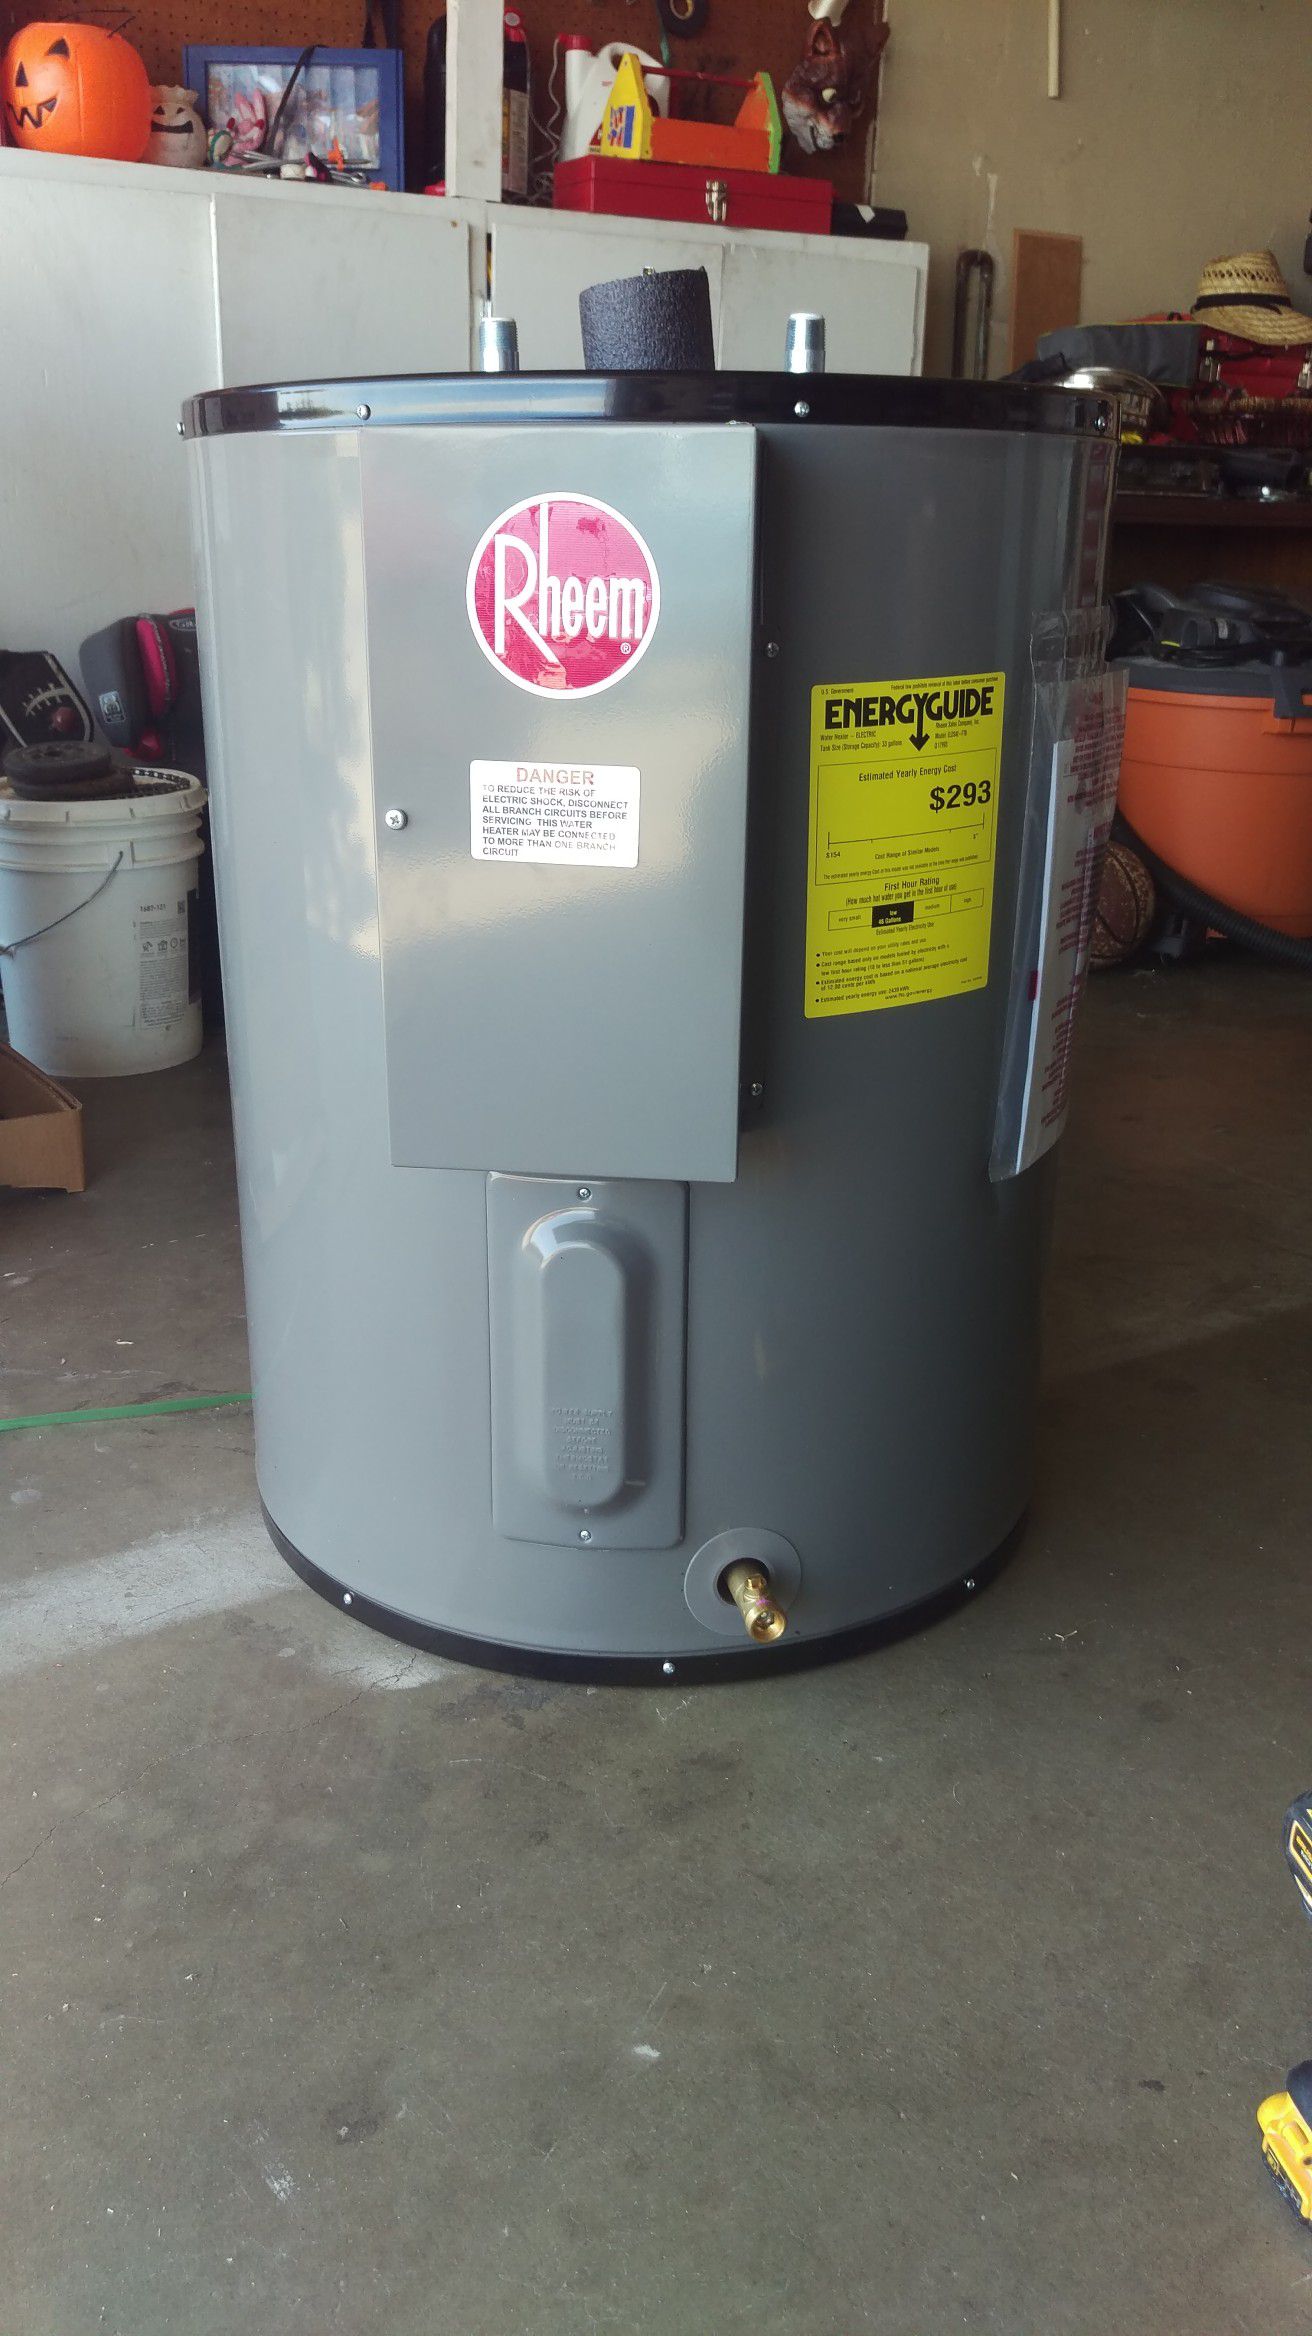 Rheem electric water heater